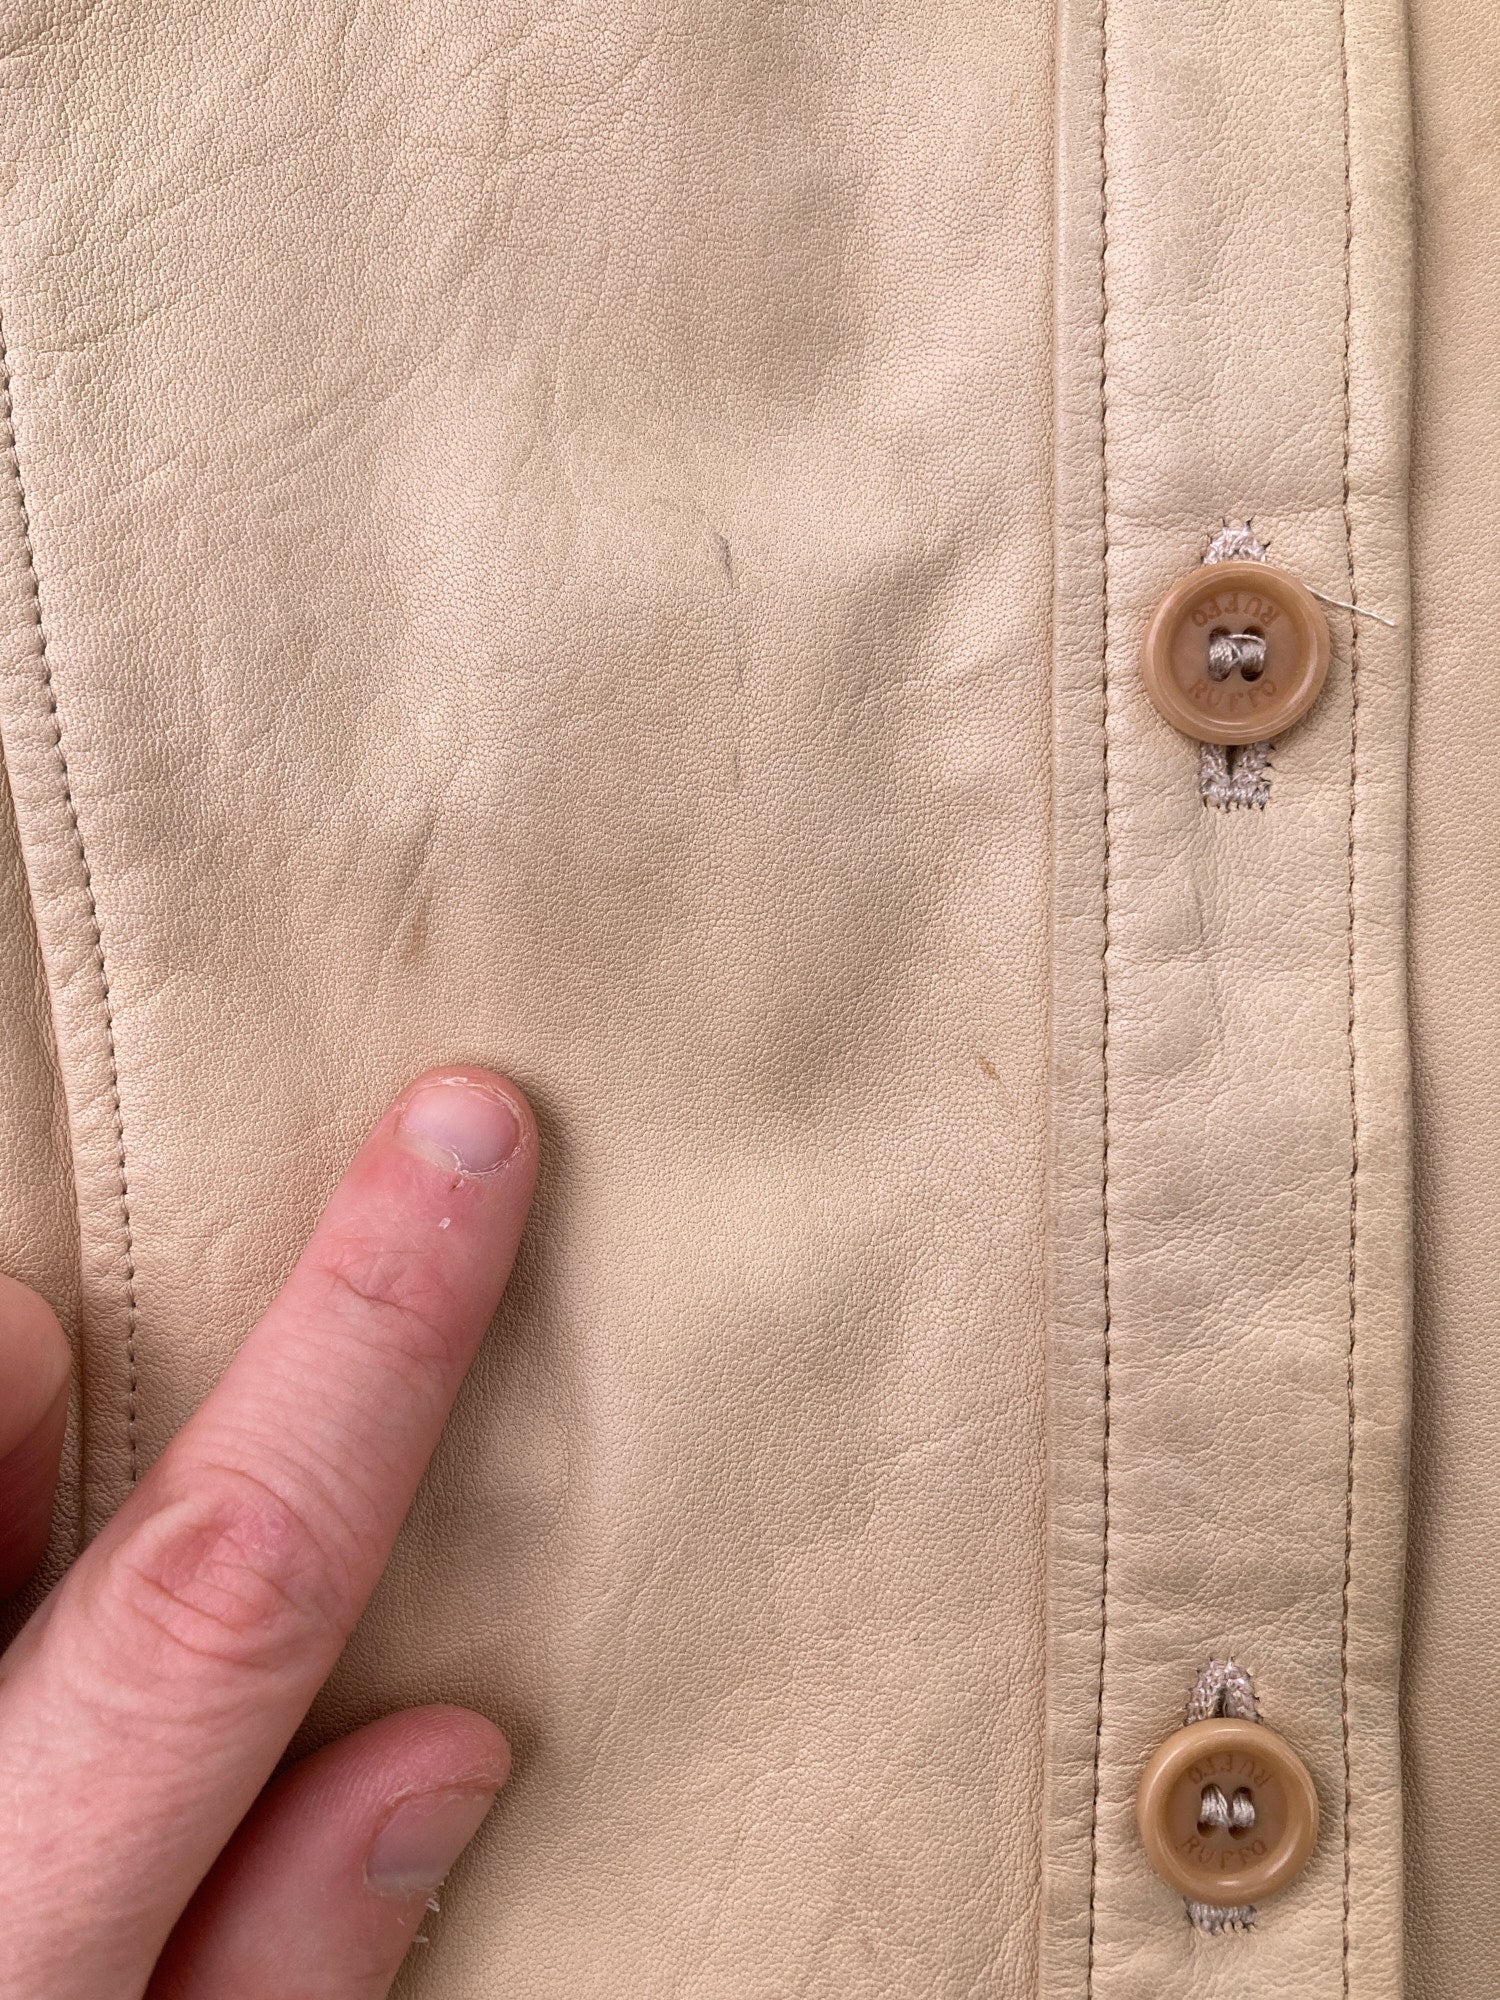 Ruffo beige leather shirt jacket - womens size 40